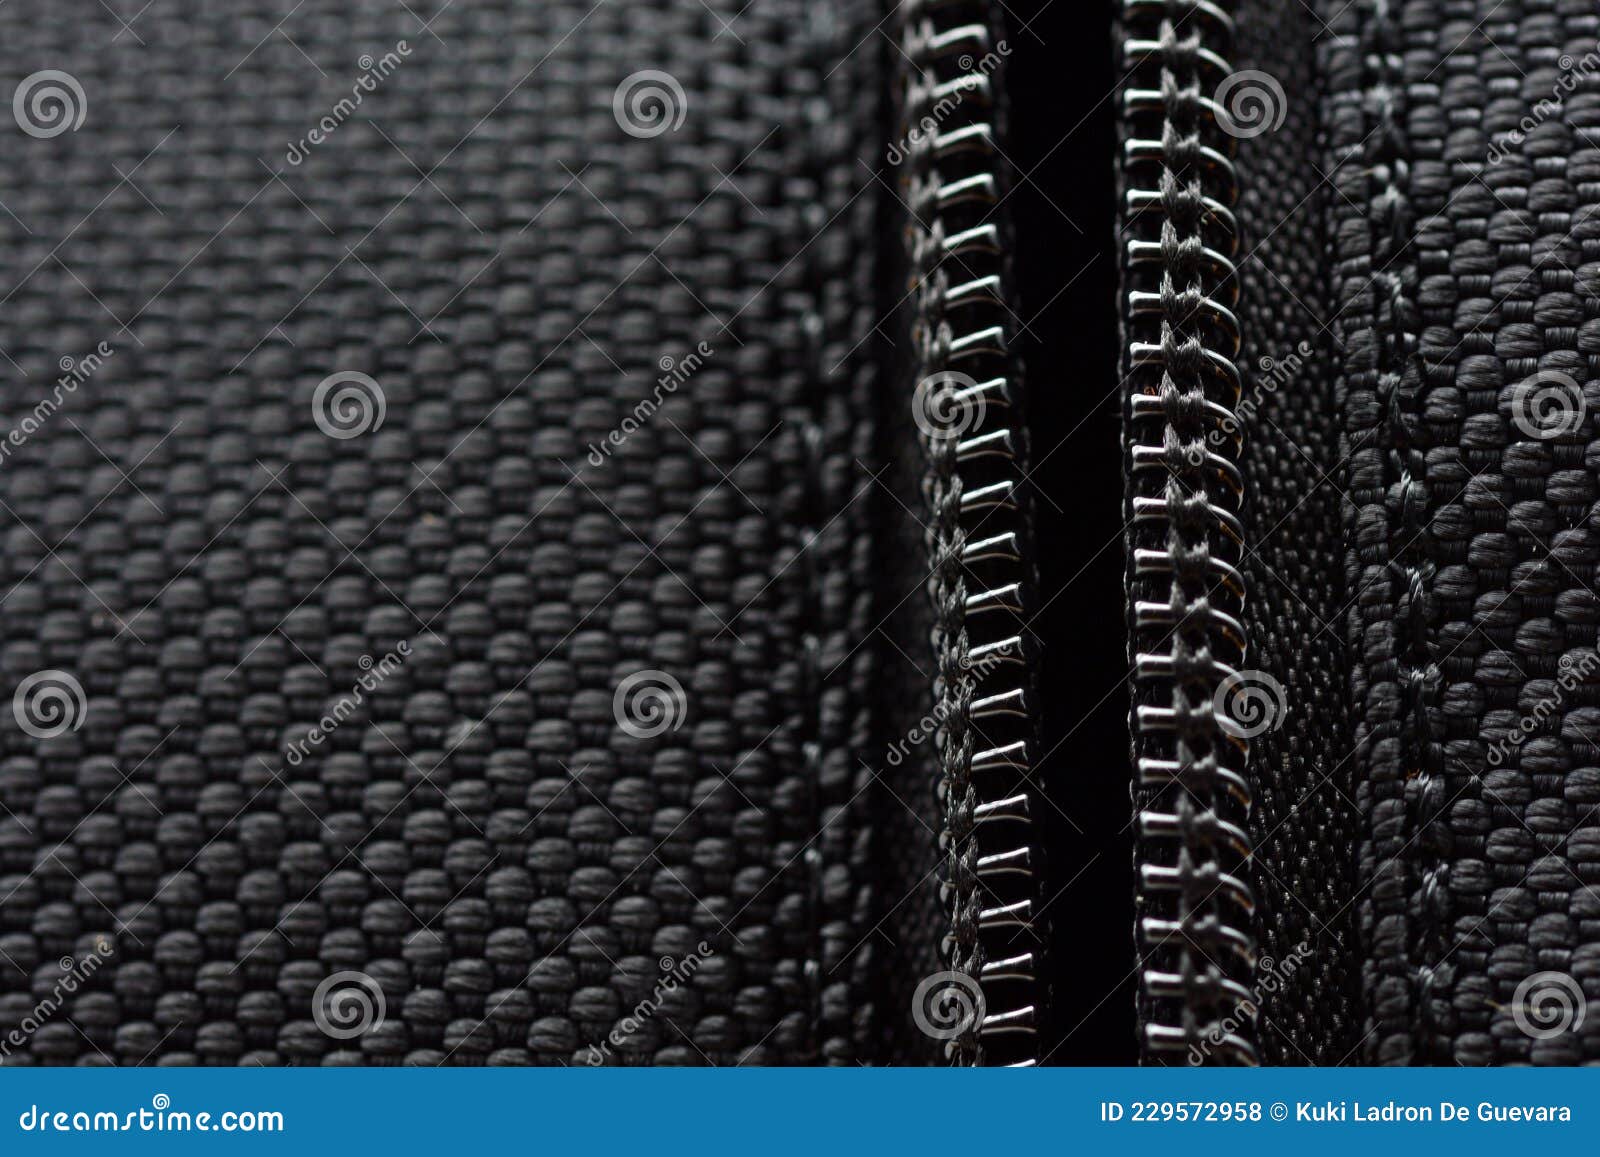 black textile zipper